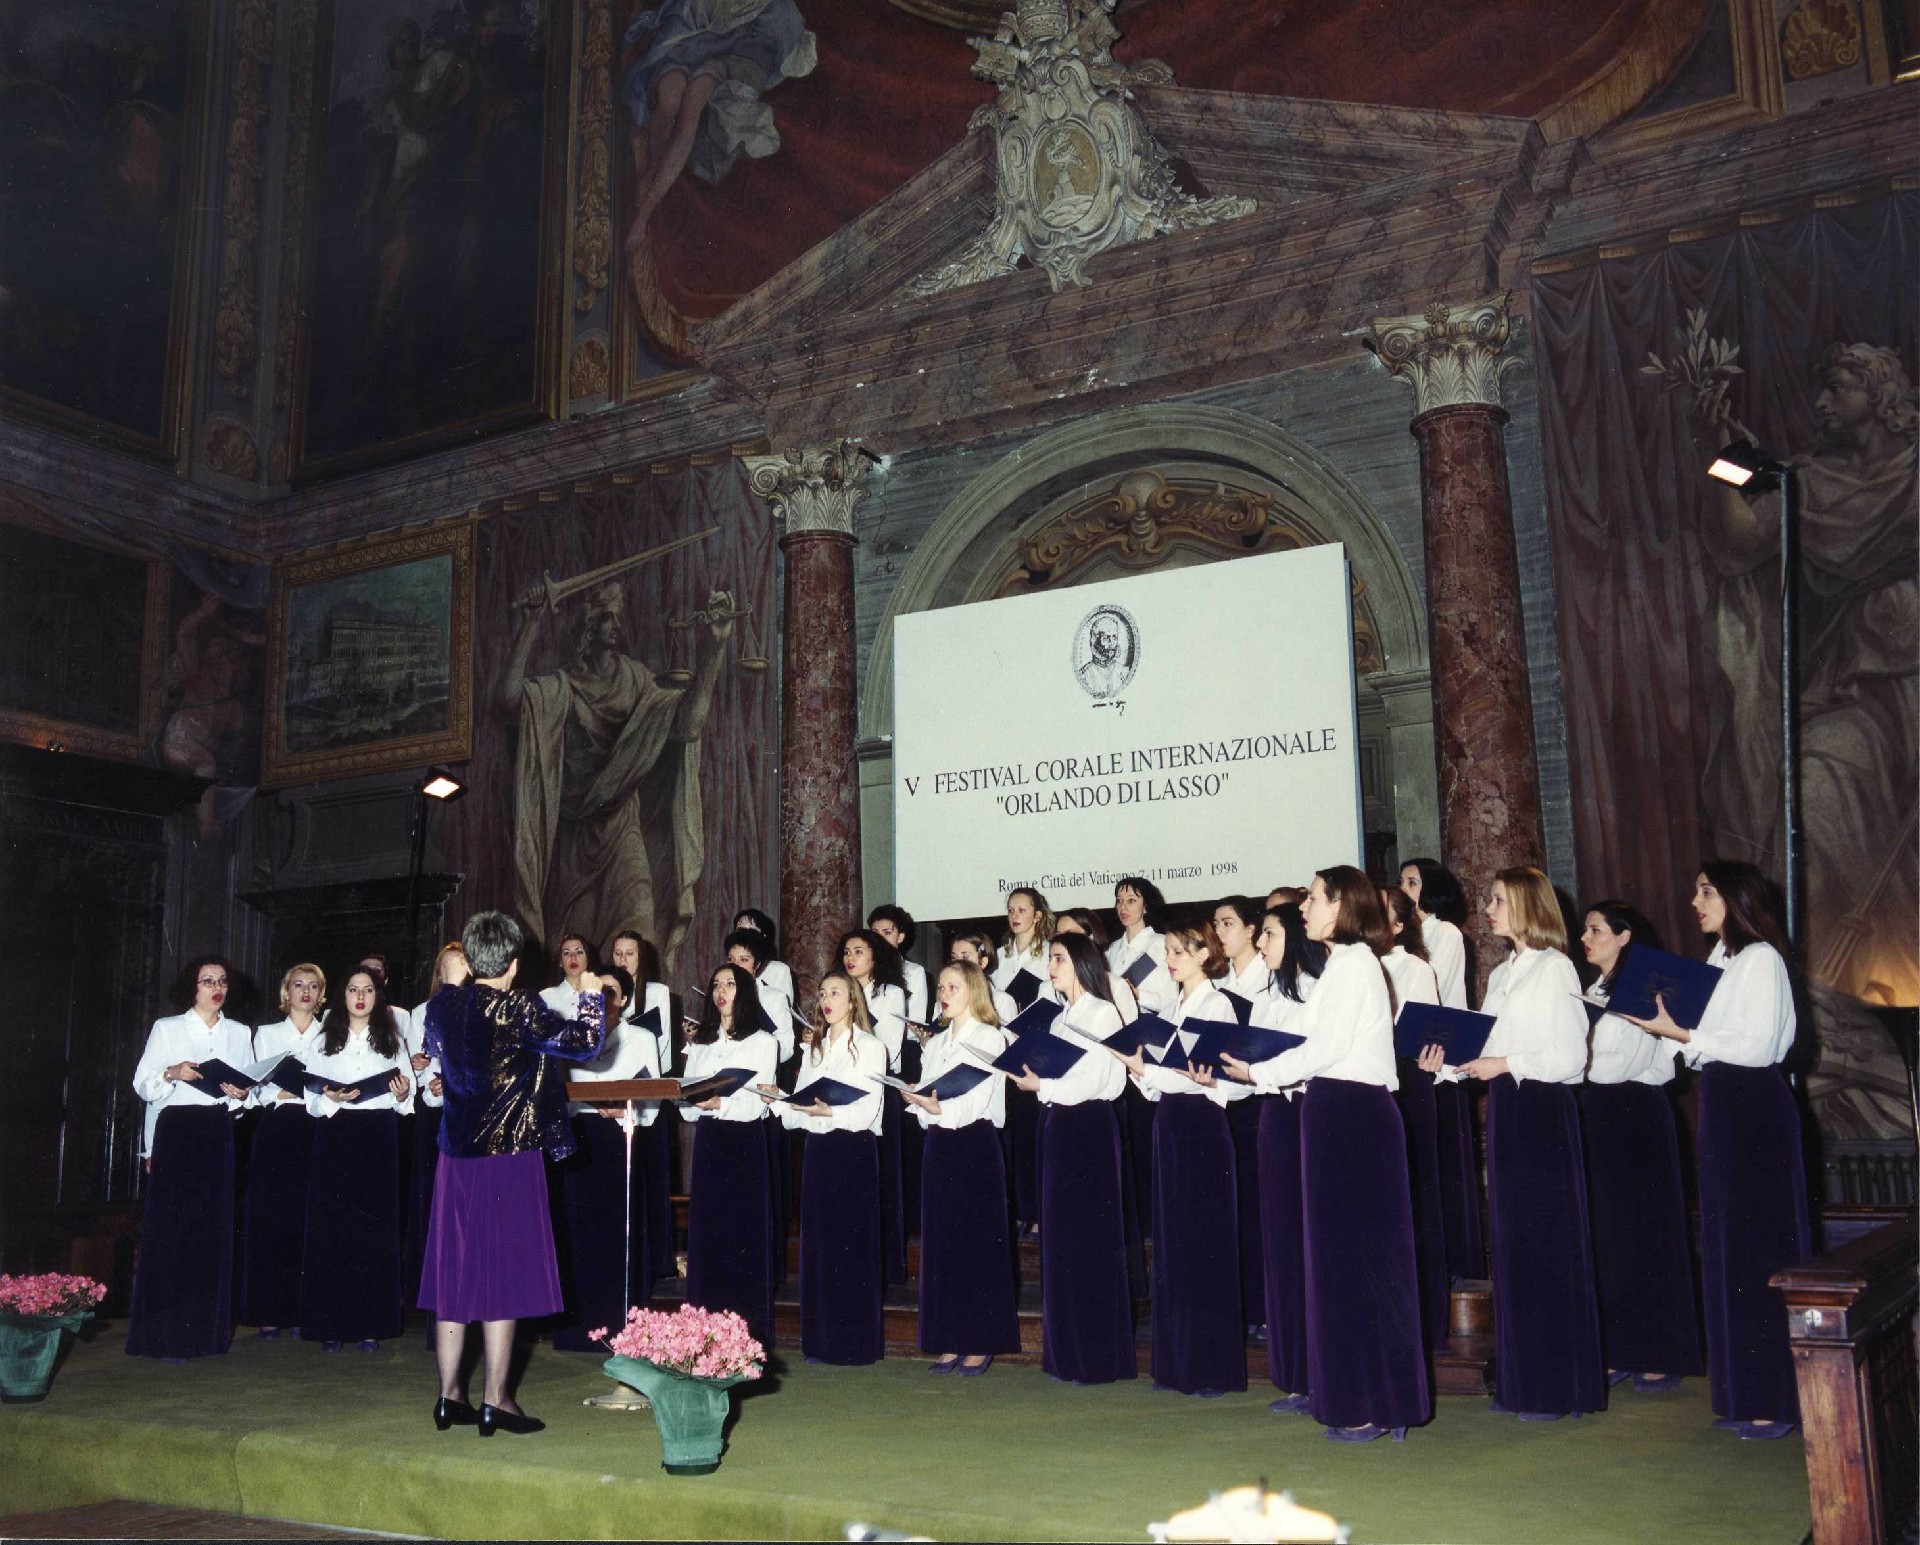 Међународни хорски фестивал Orlando di Lasso, Рим 1998.